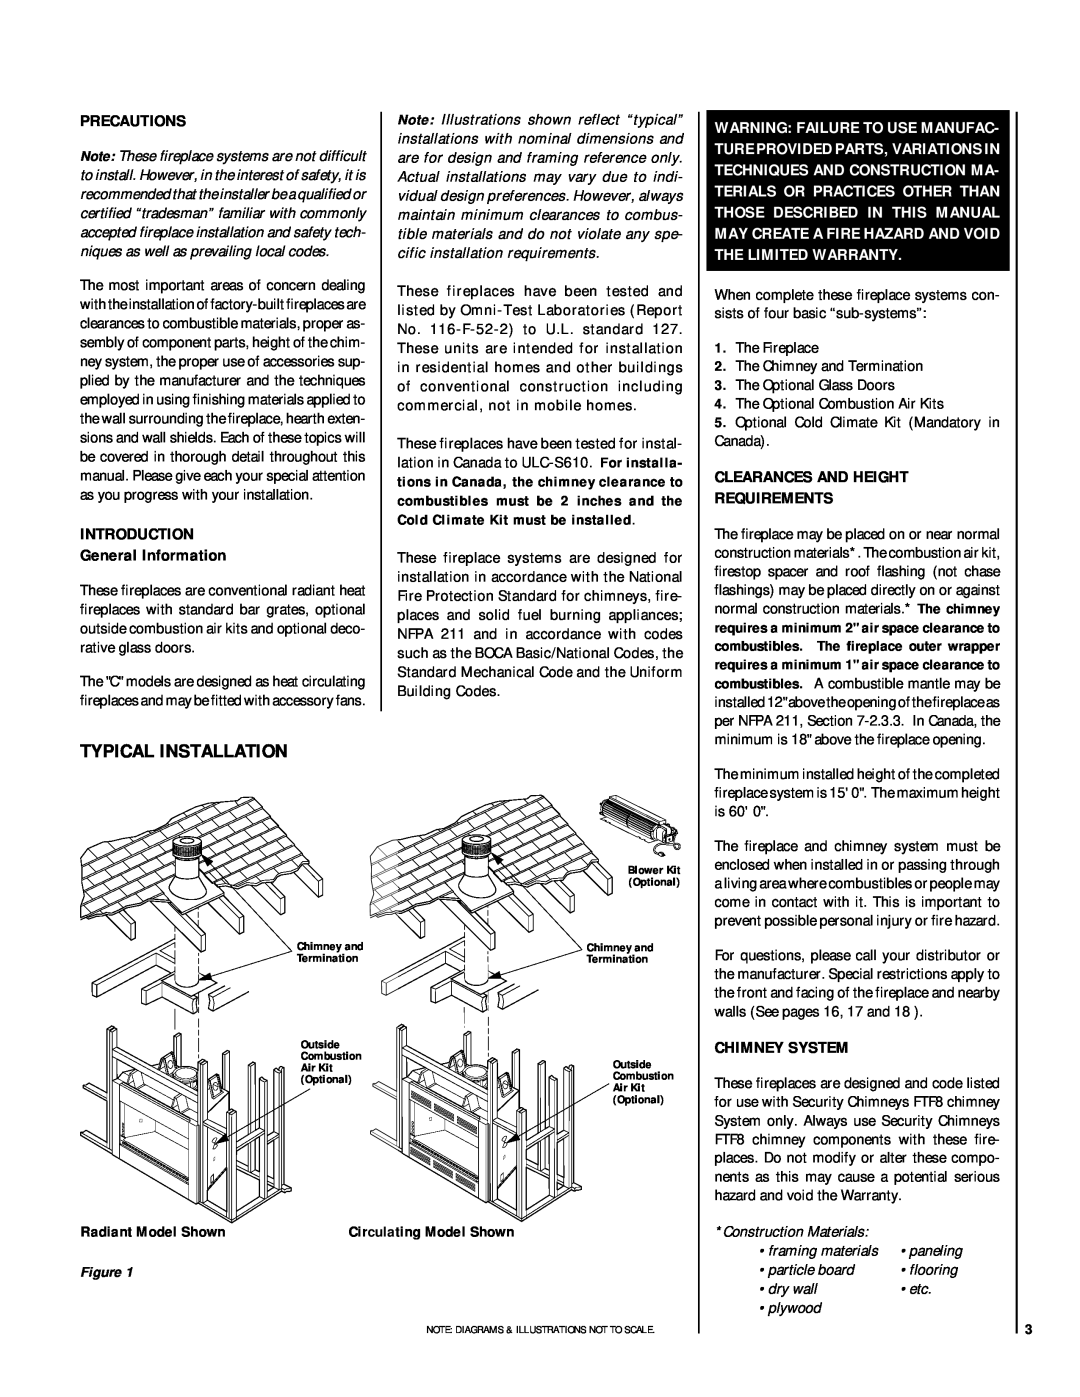 Lennox Hearth HCI-42, RDI-42 Typical Installation, Precautions, INTRODUCTION General Information, Chimney System, flooring 